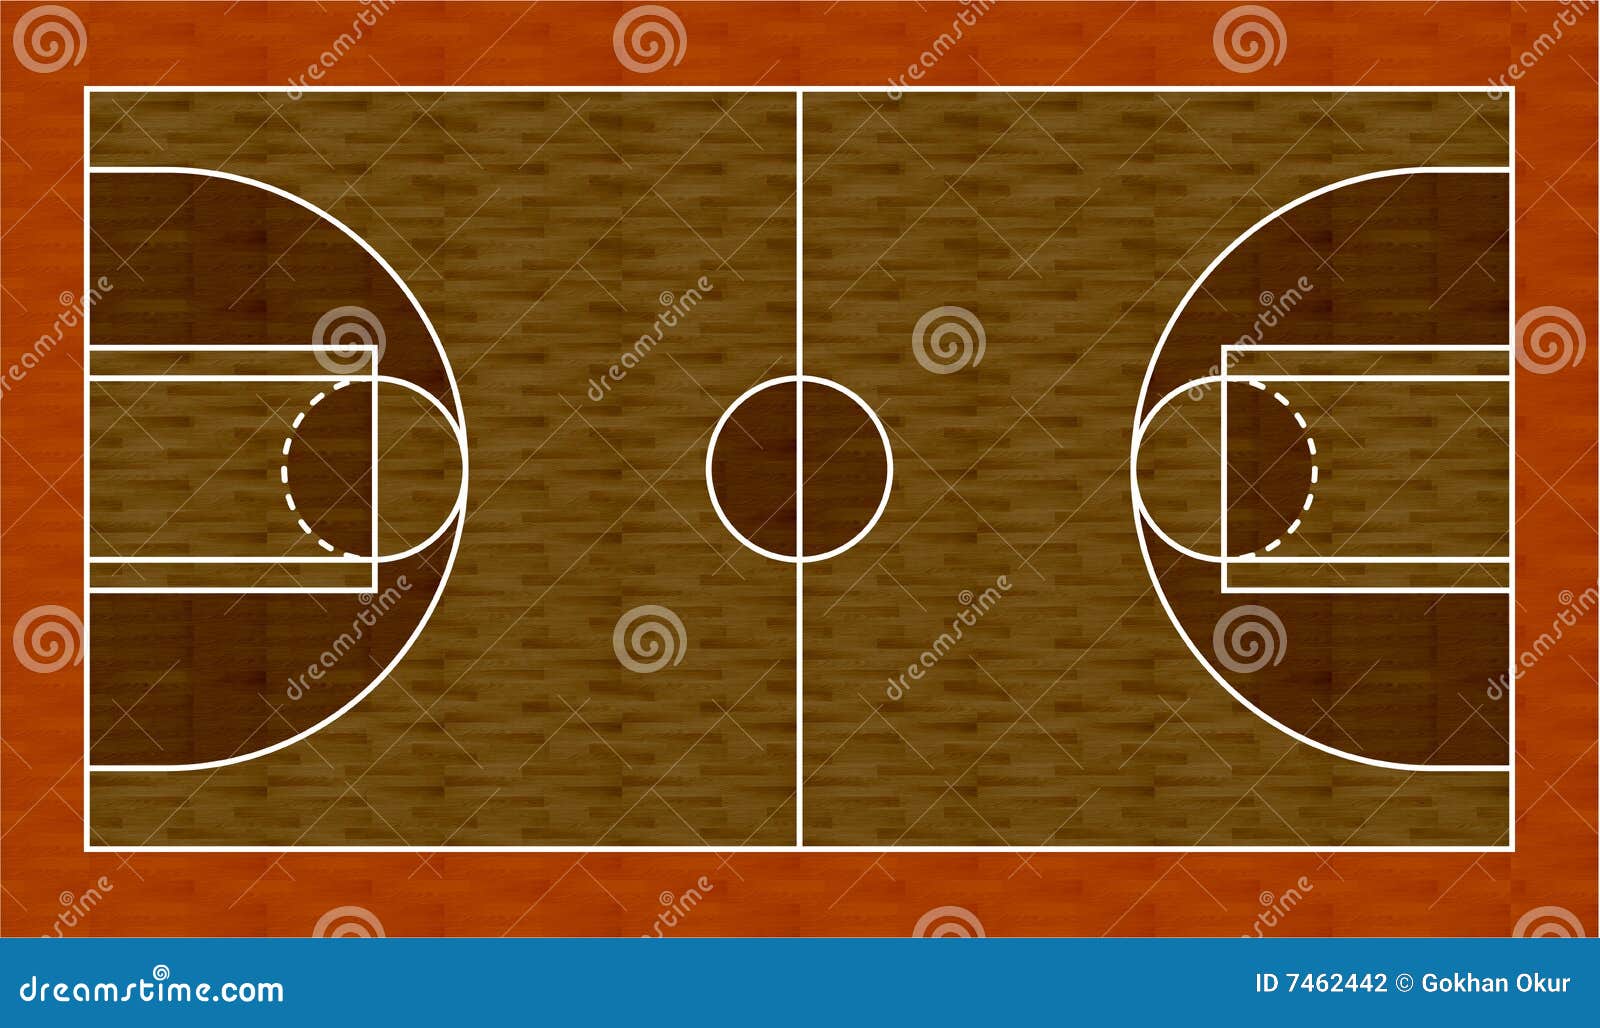 3D Map Basketball Stock Photography - Image: 7462442